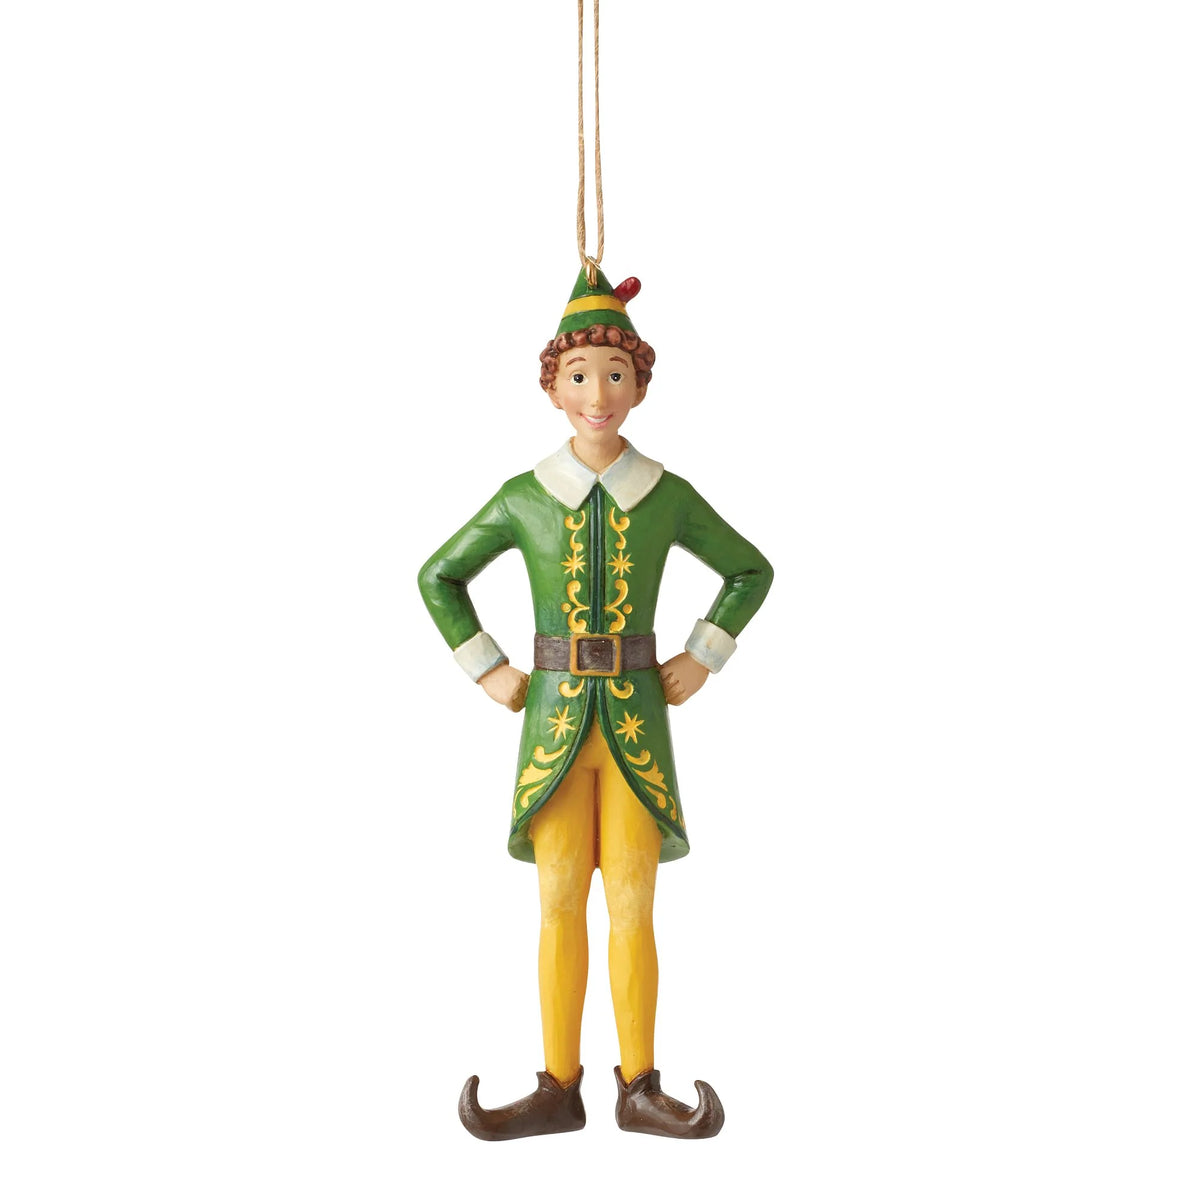 Buddy Elf Pose Ornament